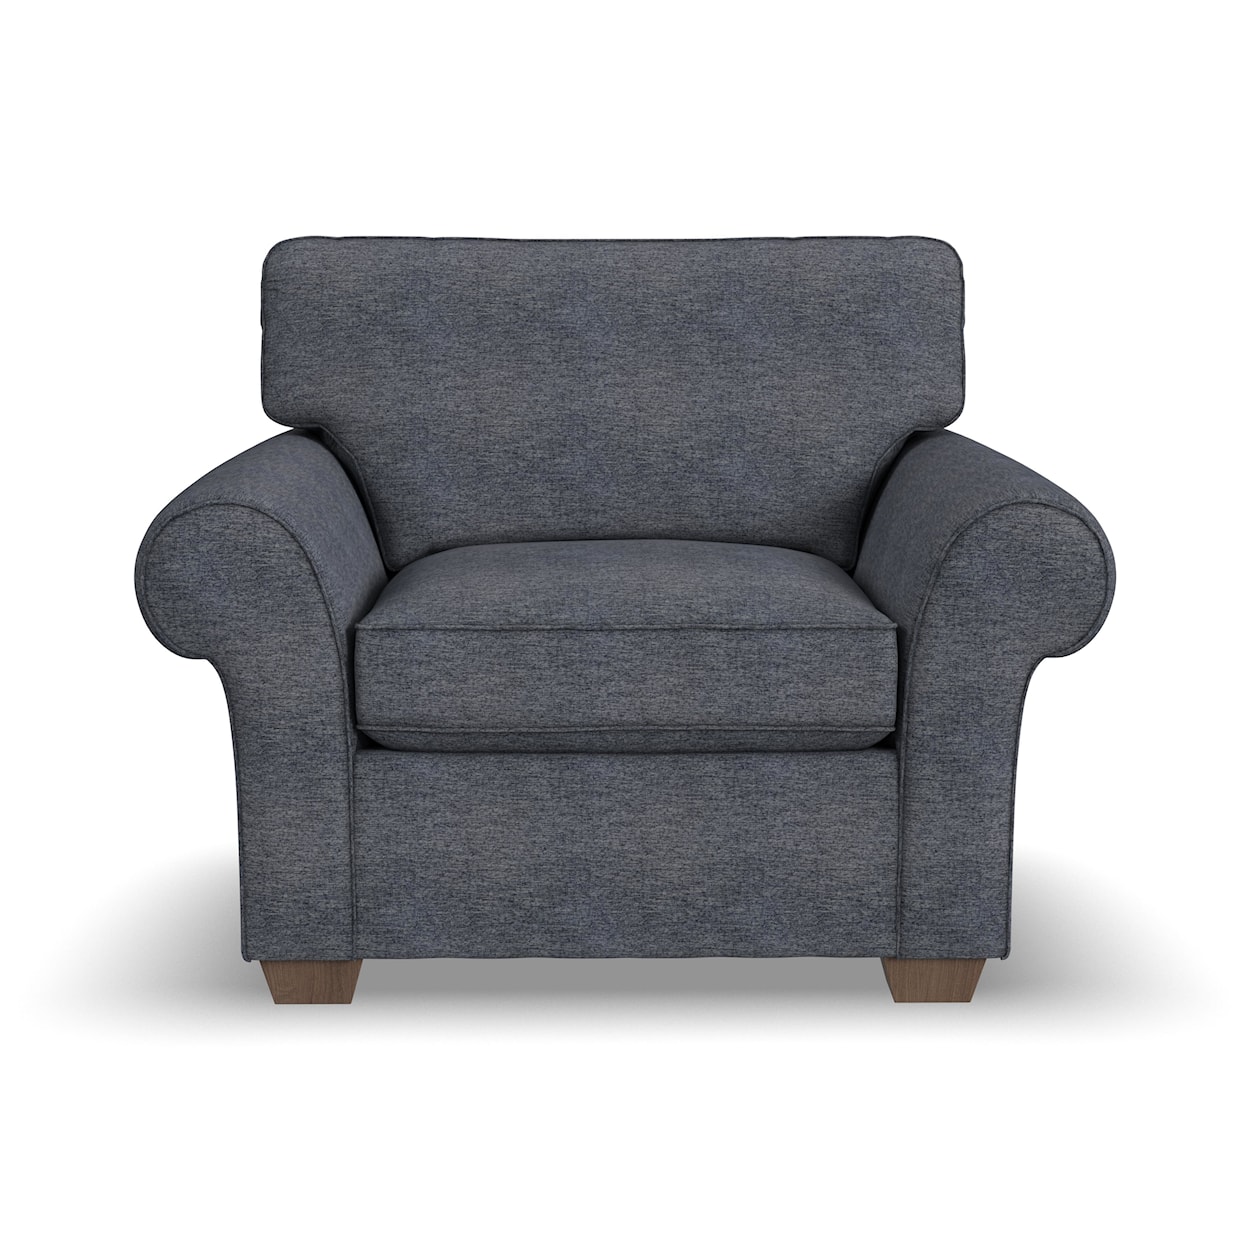 Flexsteel Vail Upholstered Chair